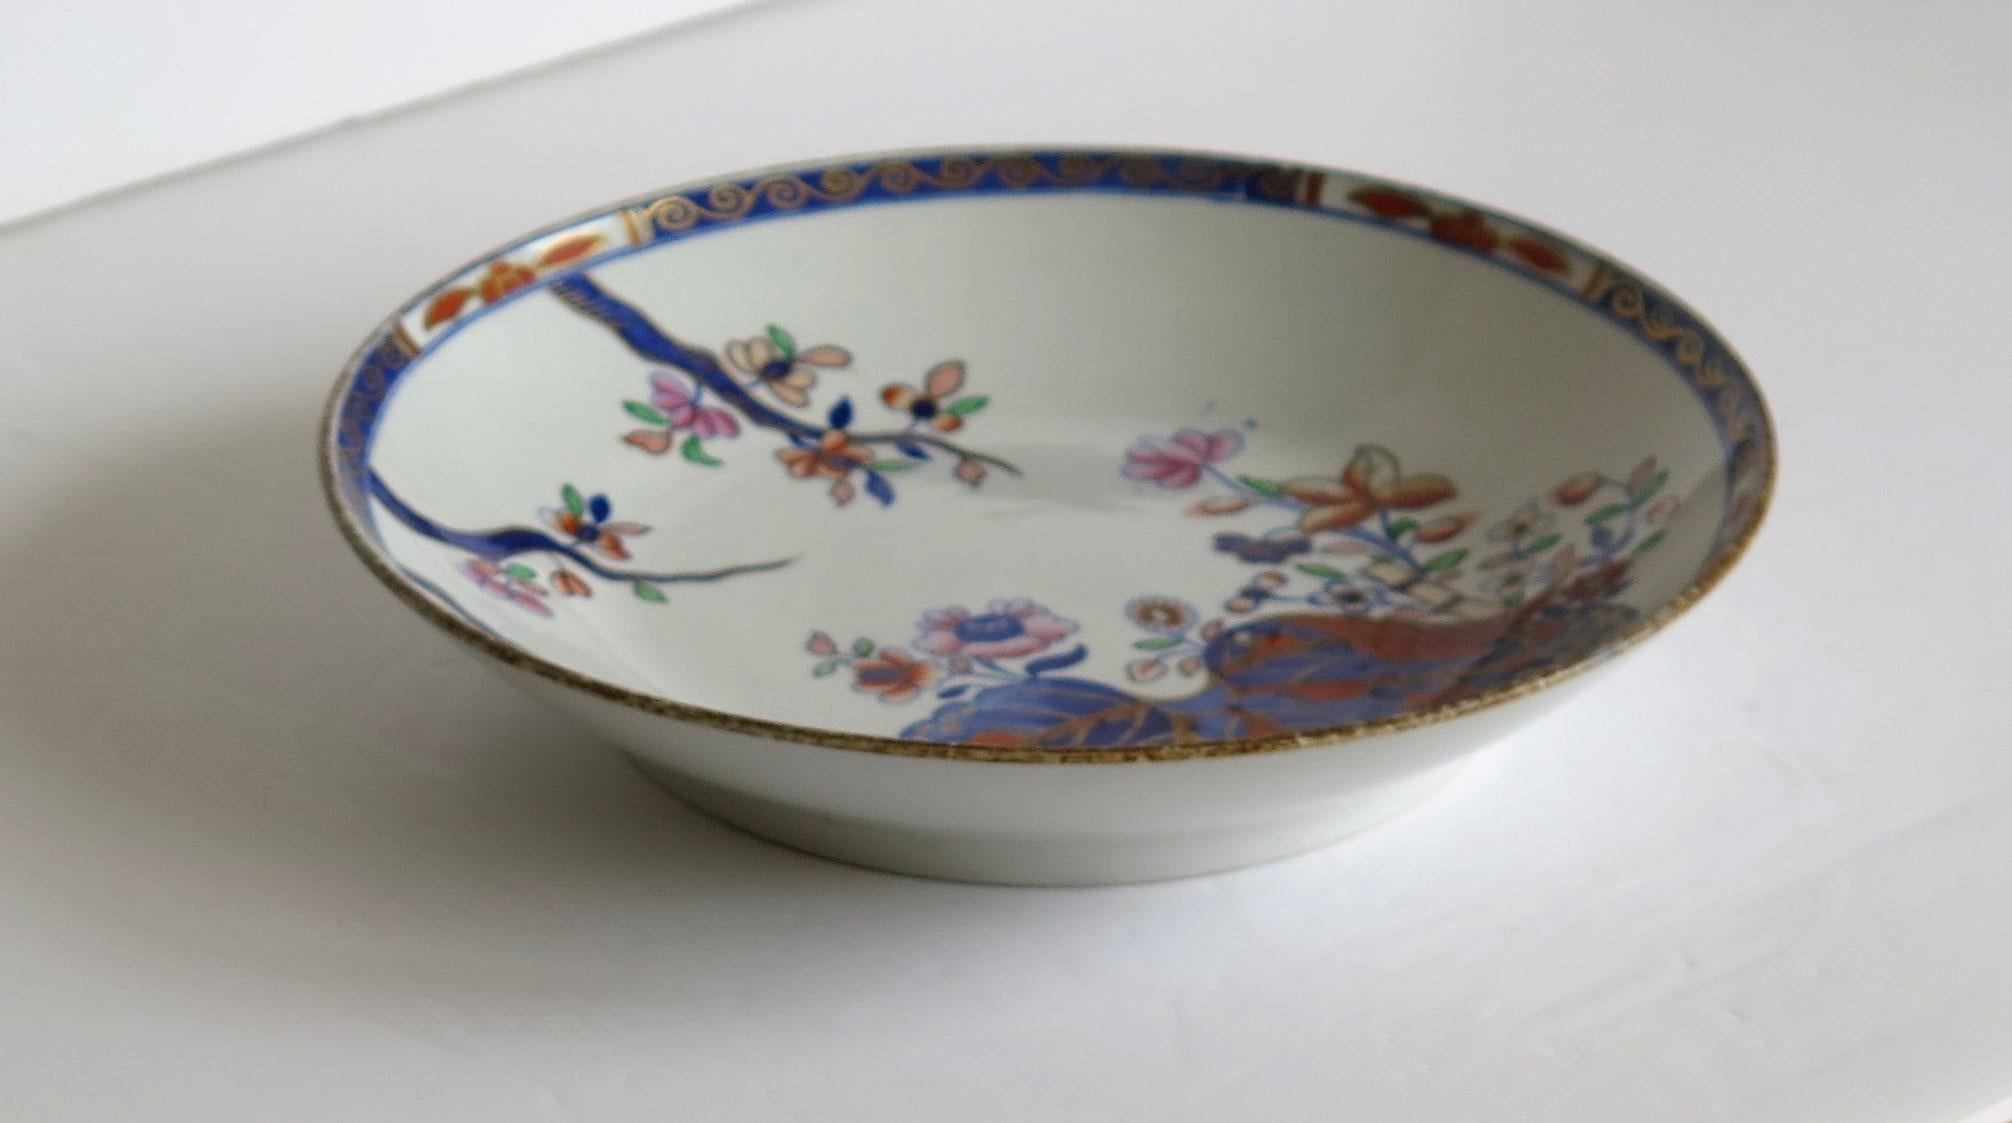 Hand-Painted Georgian Spode Deep Plate or Dish Porcelain Tobacco Leaf Pattern 2061 circa 1805